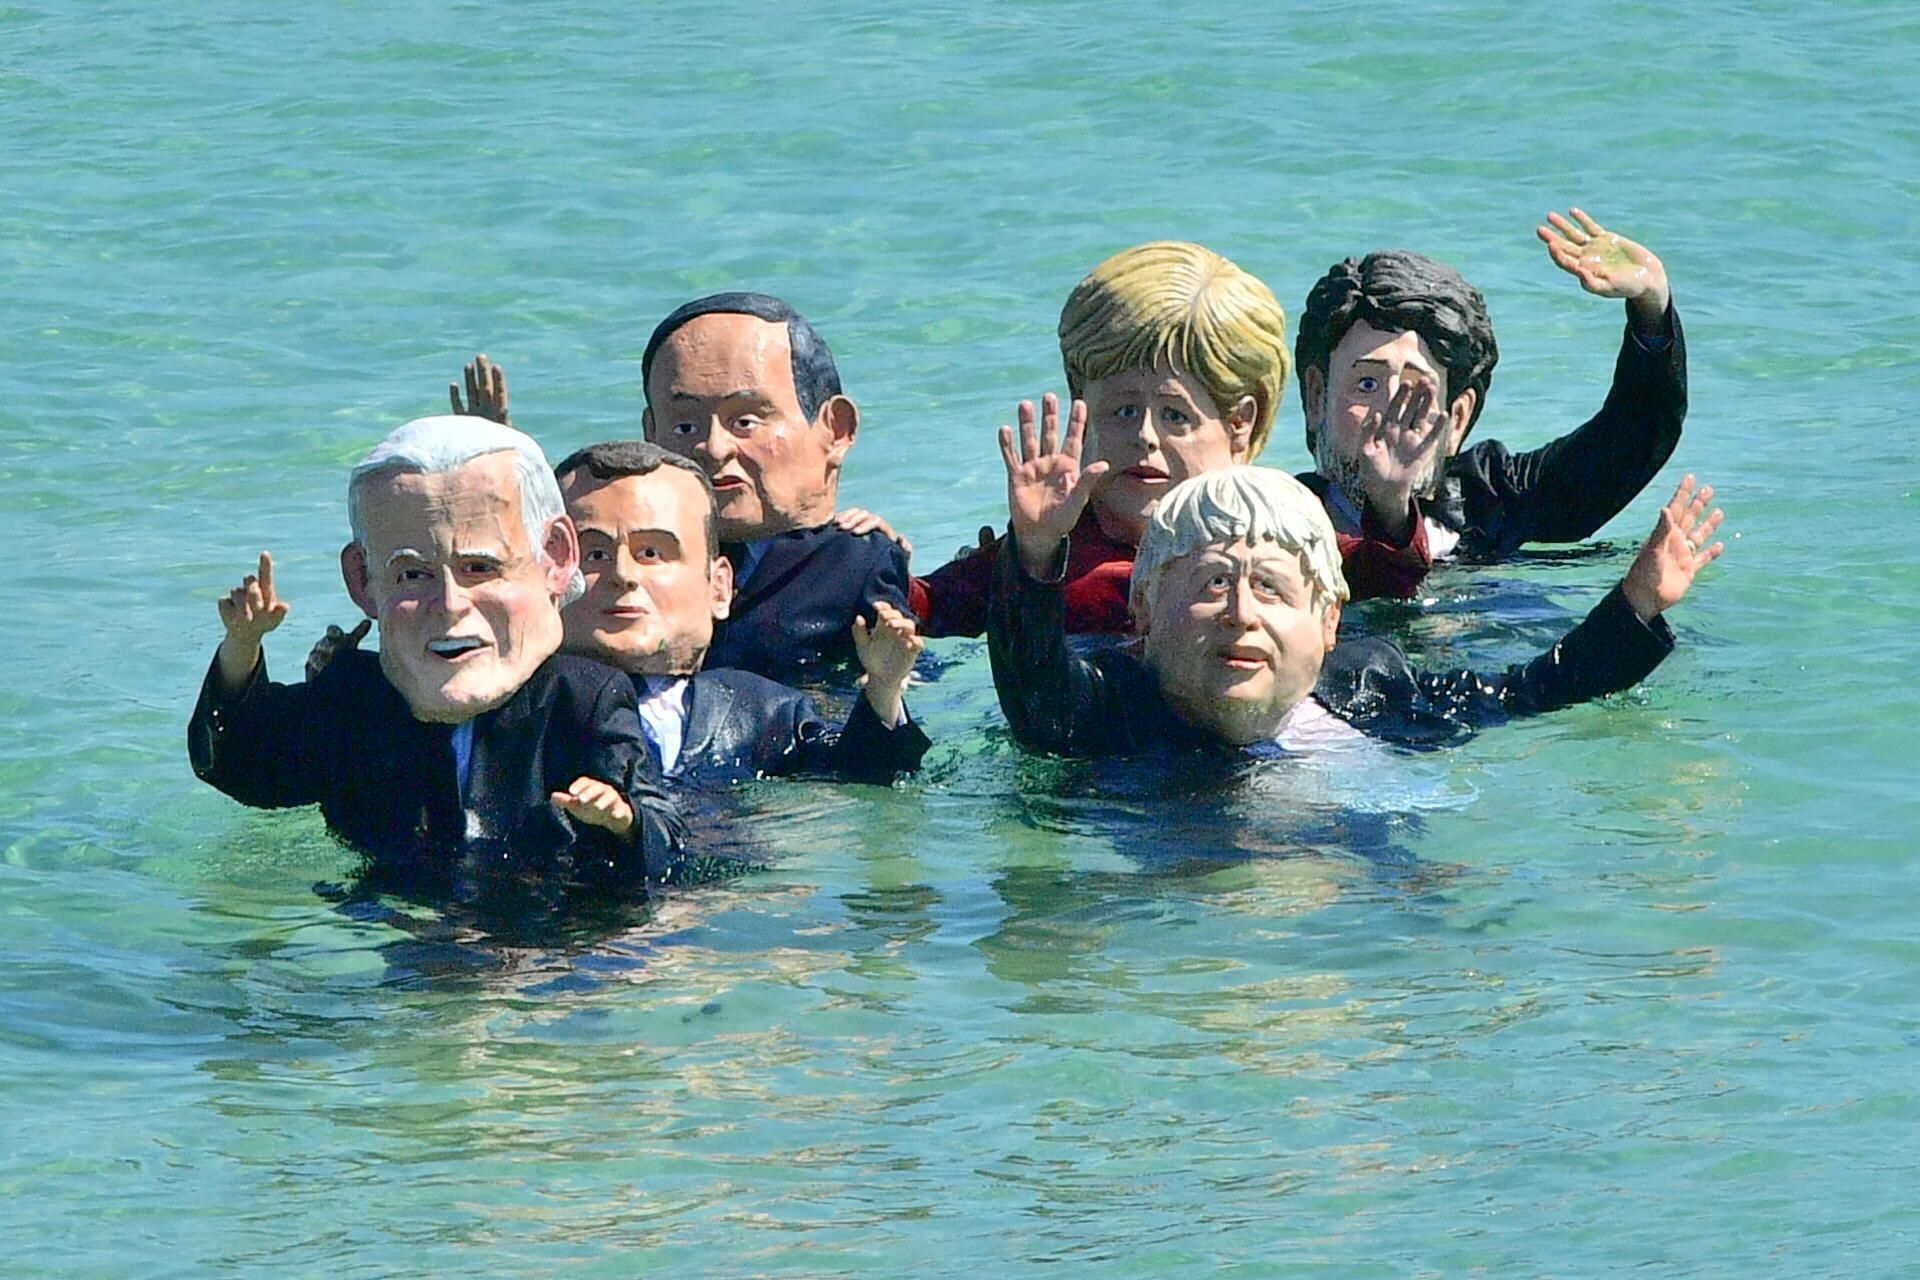 G7 leaders drowning